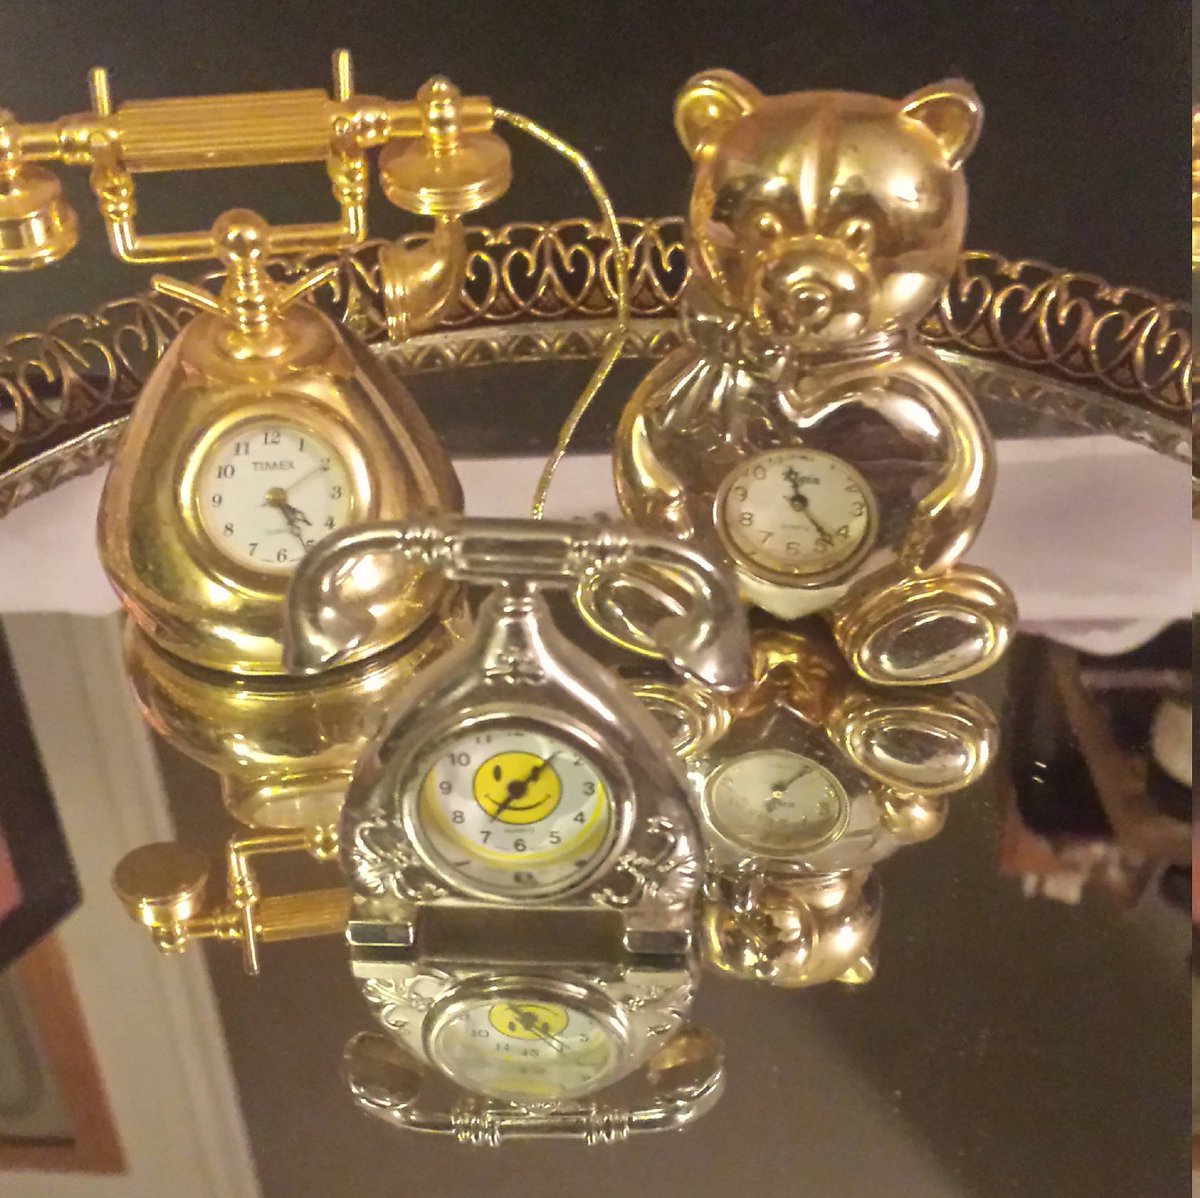 #etsy shop: Miniature Clocks Set 3 Clocks Telephone Clock With Receiver 'Timex',Bear Clock 'Elgin', Phone Clock Happy Face, All 3 are'Quartz' etsy.me/2FVknvH #Timex #elgin #quartzclock #clock # #miniatureclocks #bearclock #telephoneclock #telephone #bear #set